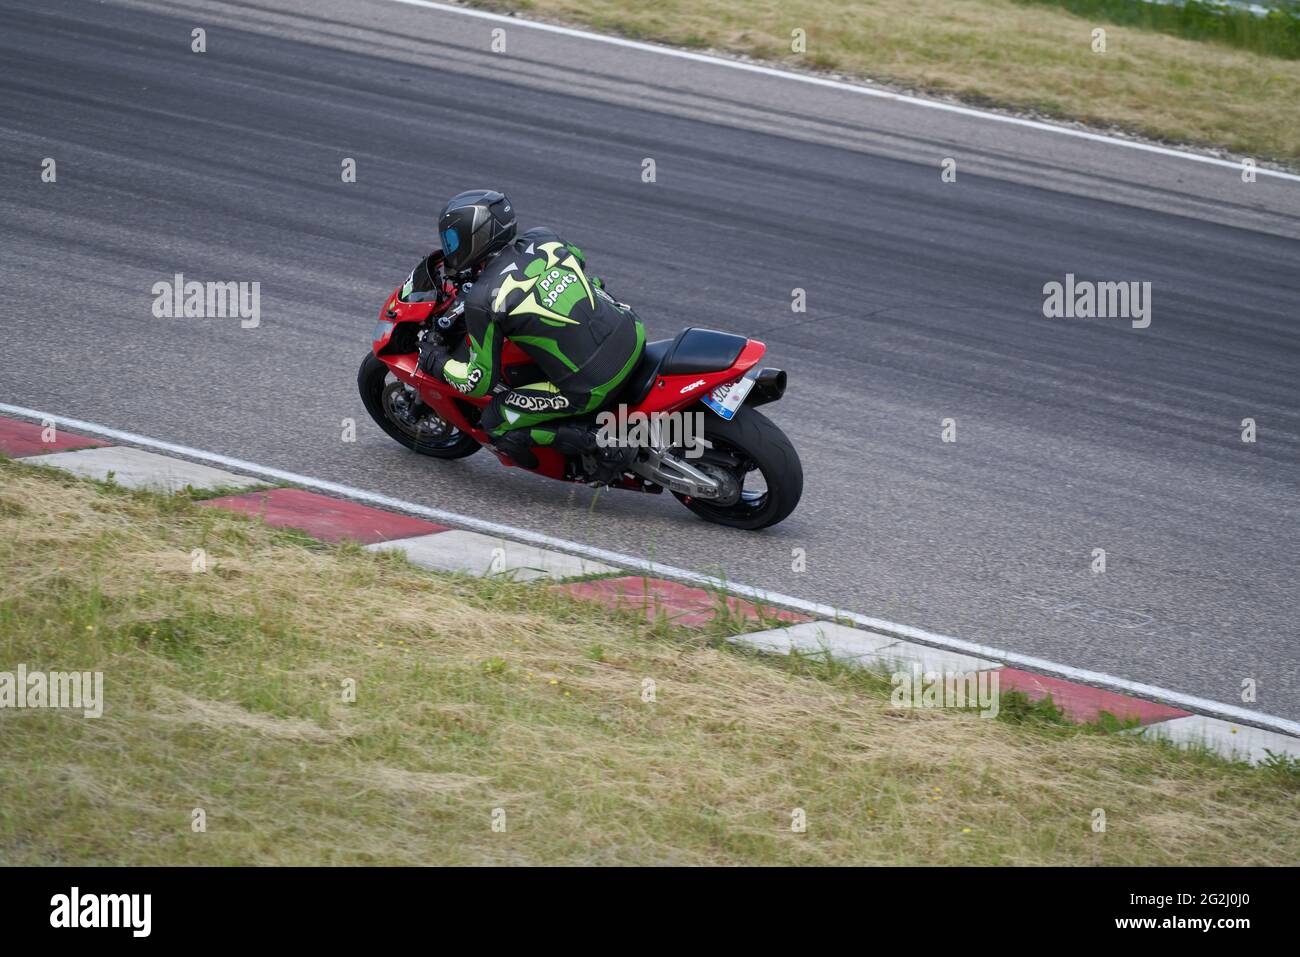 11-05-2020 Kaunas, Lithuania Motorcyclist at sport bike rides by empty asphalt road. sport bike. MotoGP race. Superbikes. Motorbikes racing. Stock Photo